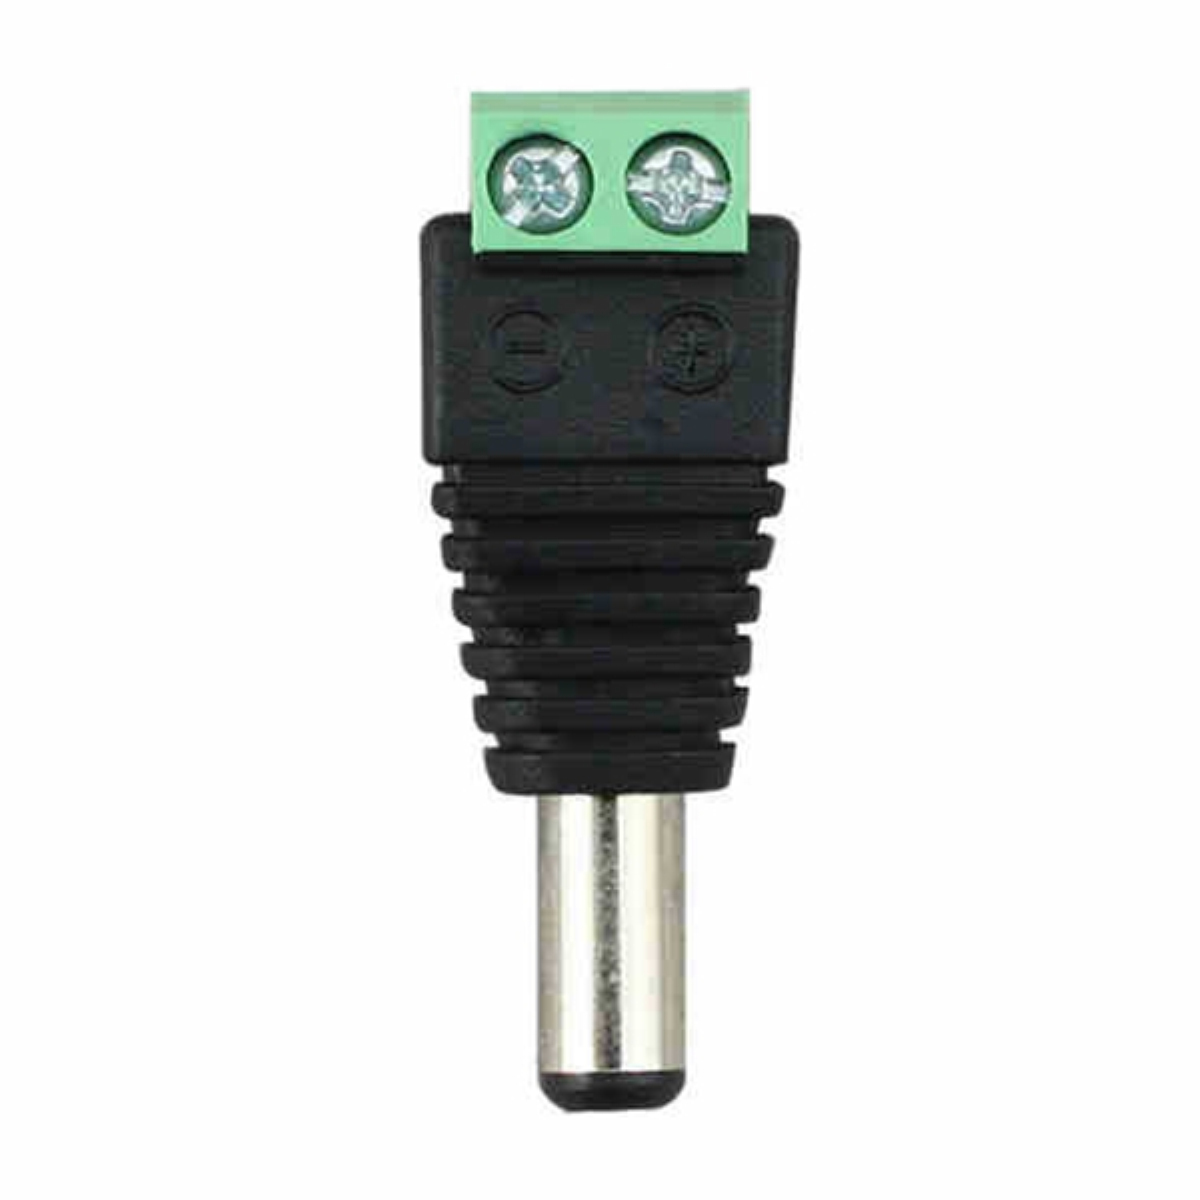 5PCS-5521mm-DC-Power-Male-Plug-Jack-Adapter-Connector-for-CCTV-LED-5050-3528-5630-Strip-Light-1372903